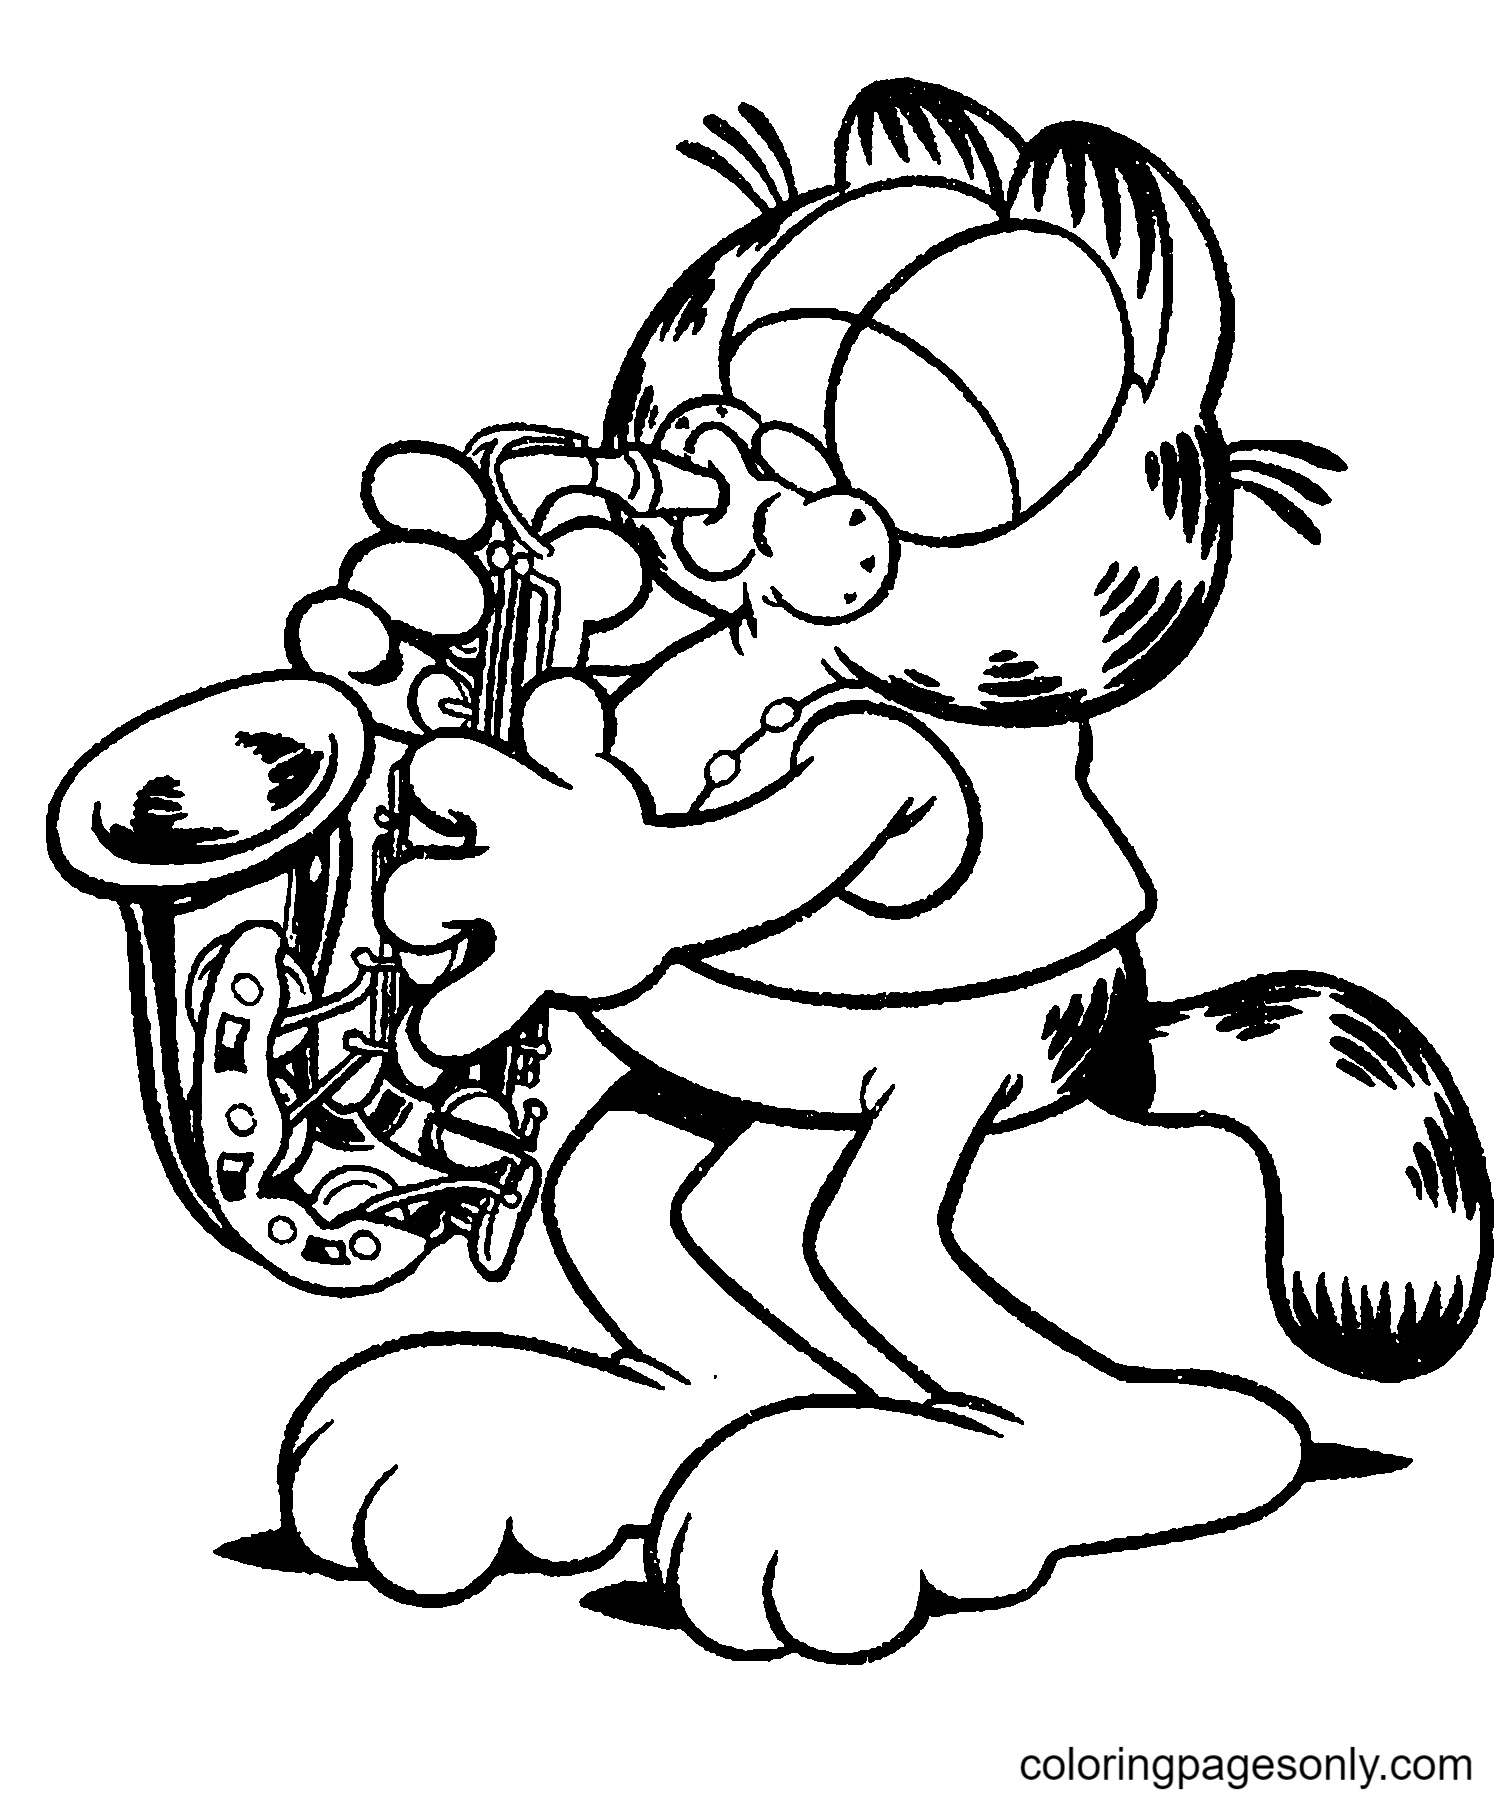 Garfield blows Saxophone from Garfield